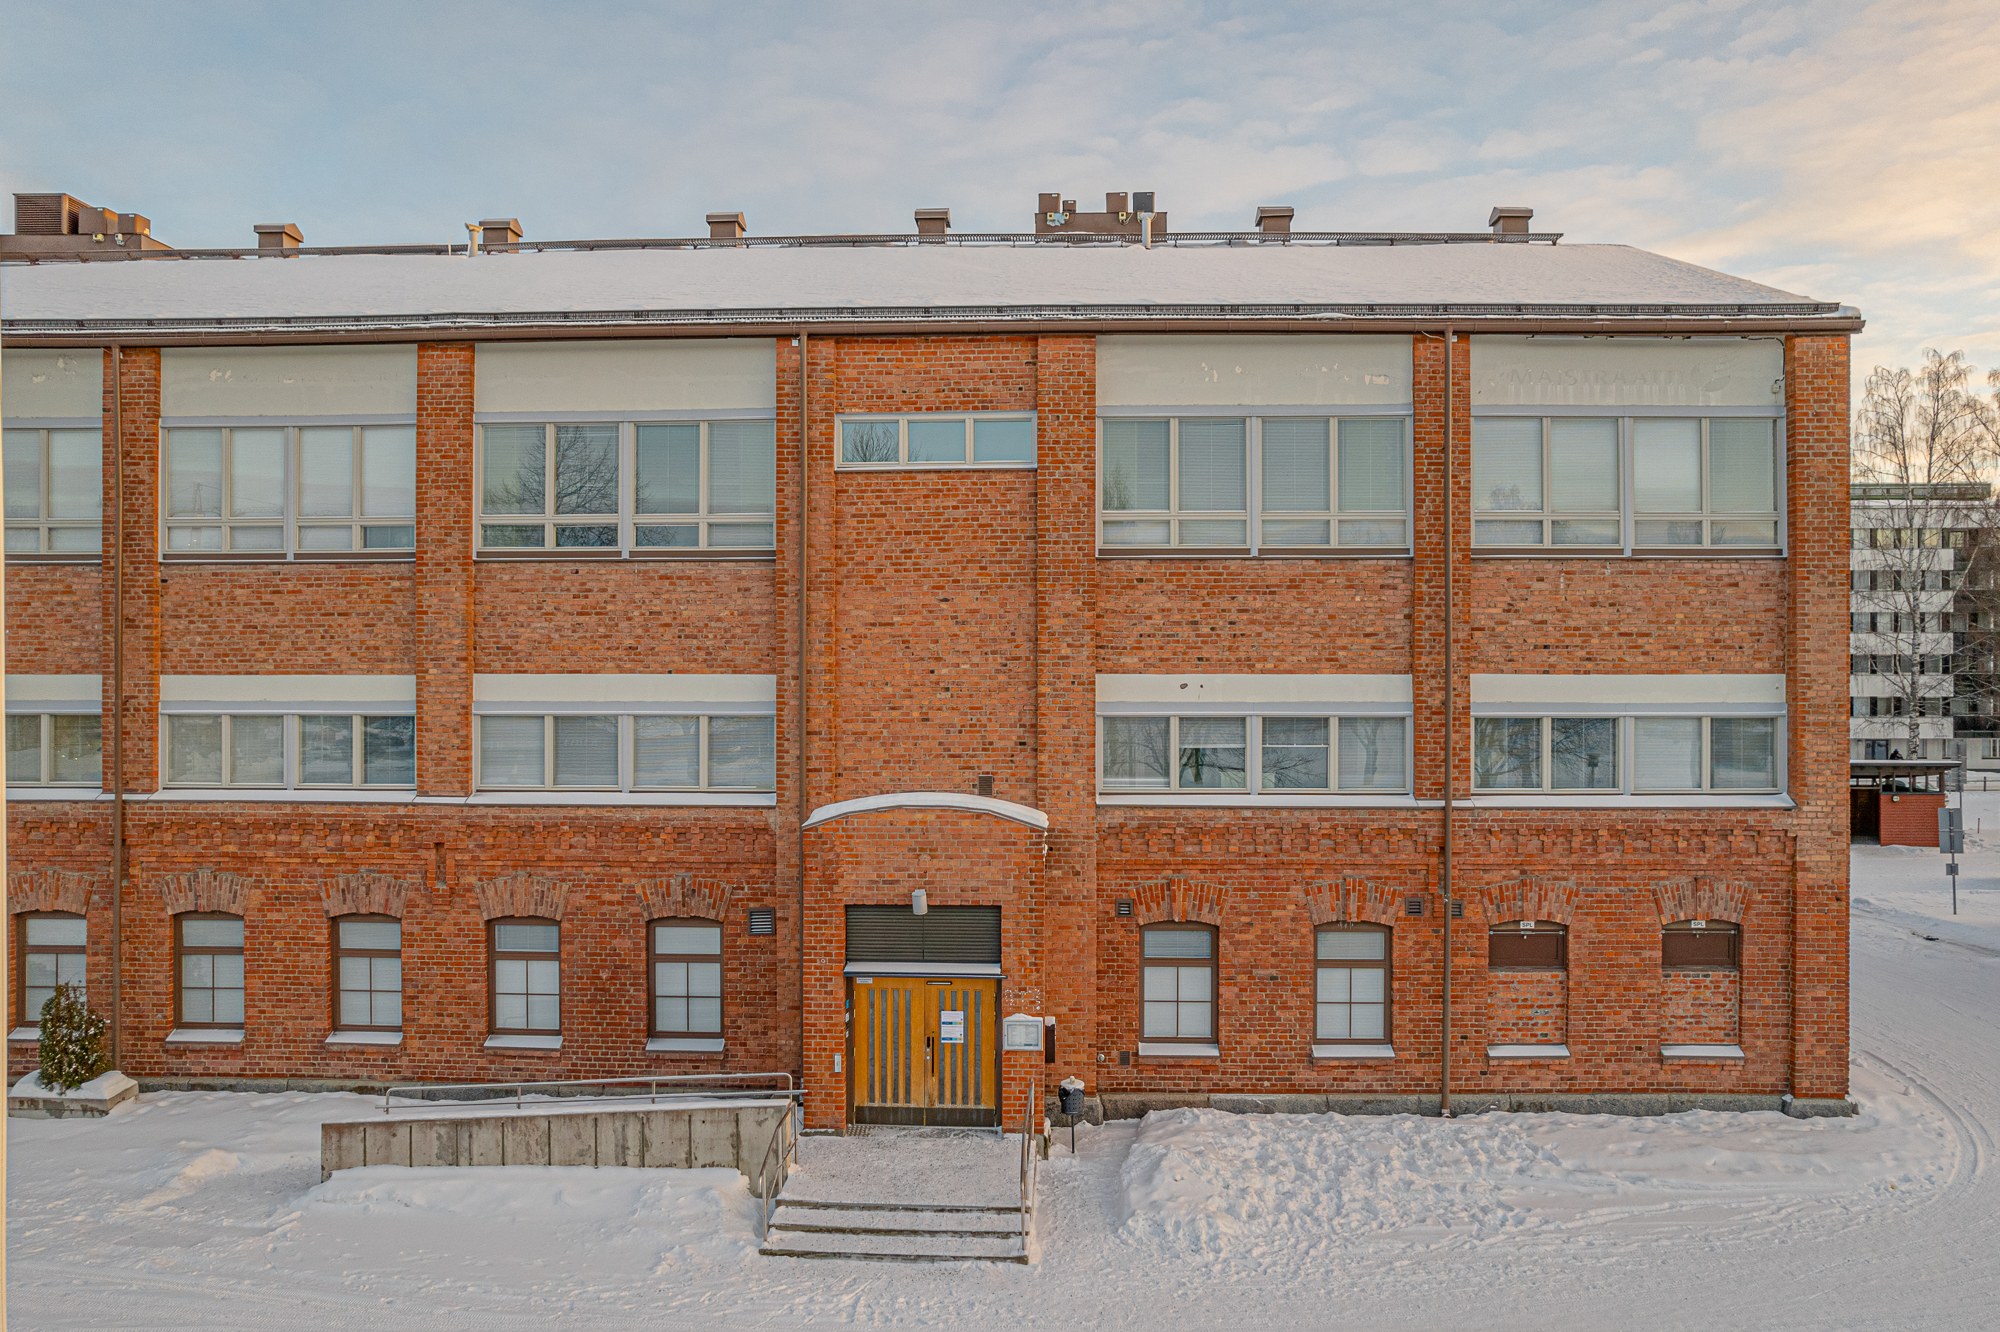 Images Digi- ja väestötietovirasto, Kuopio